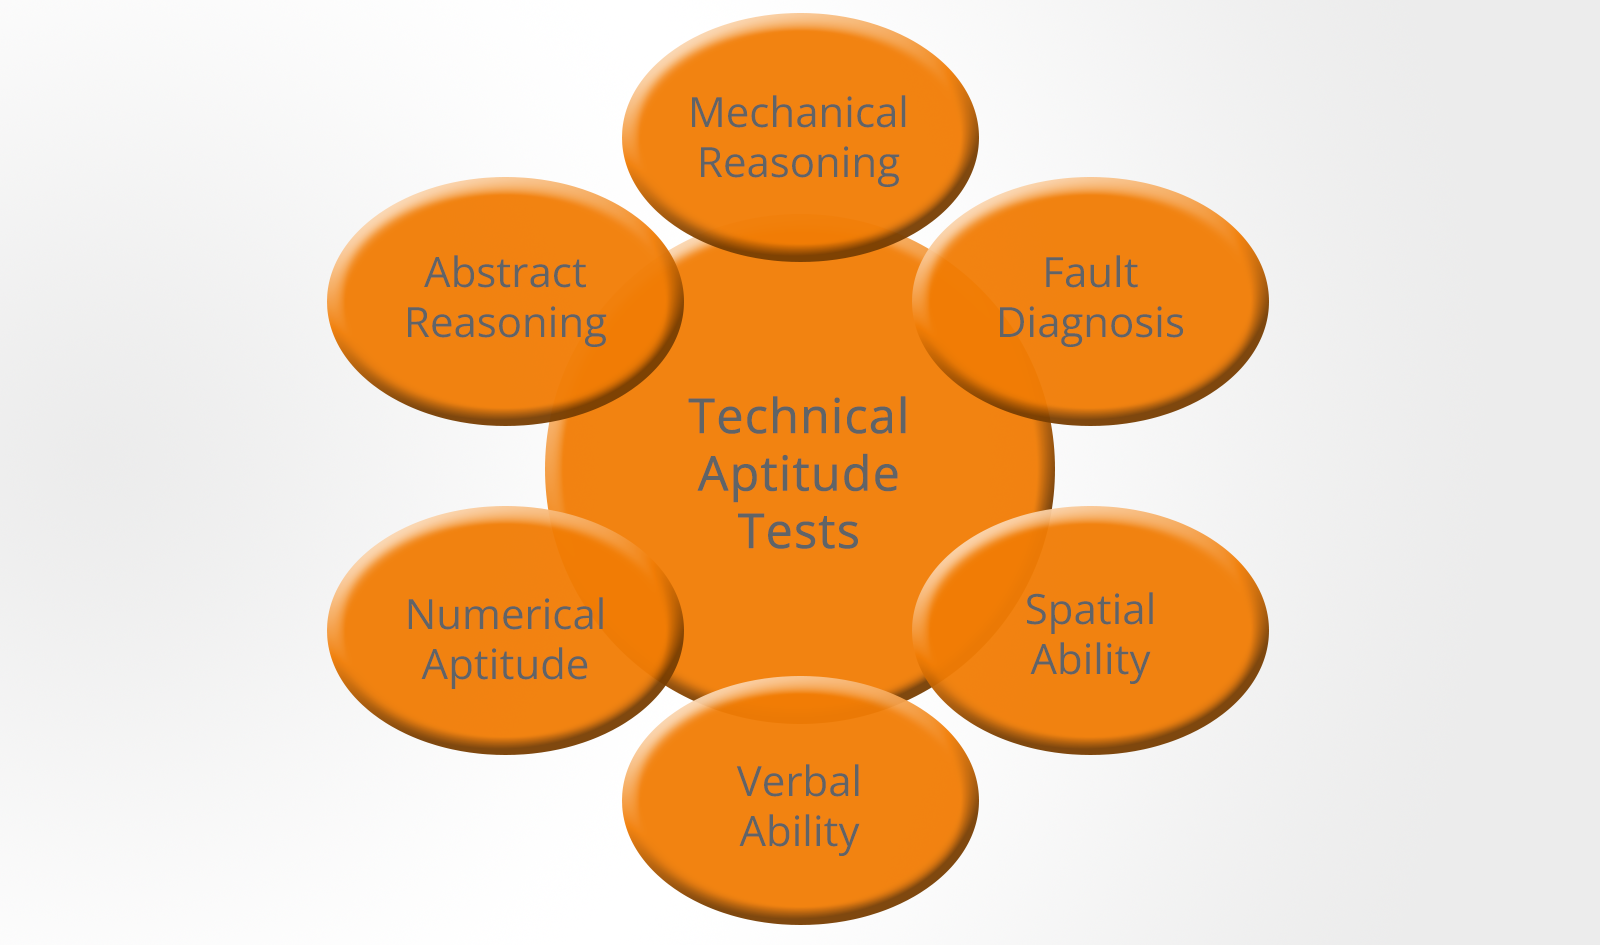 Technical Aptitude Tests